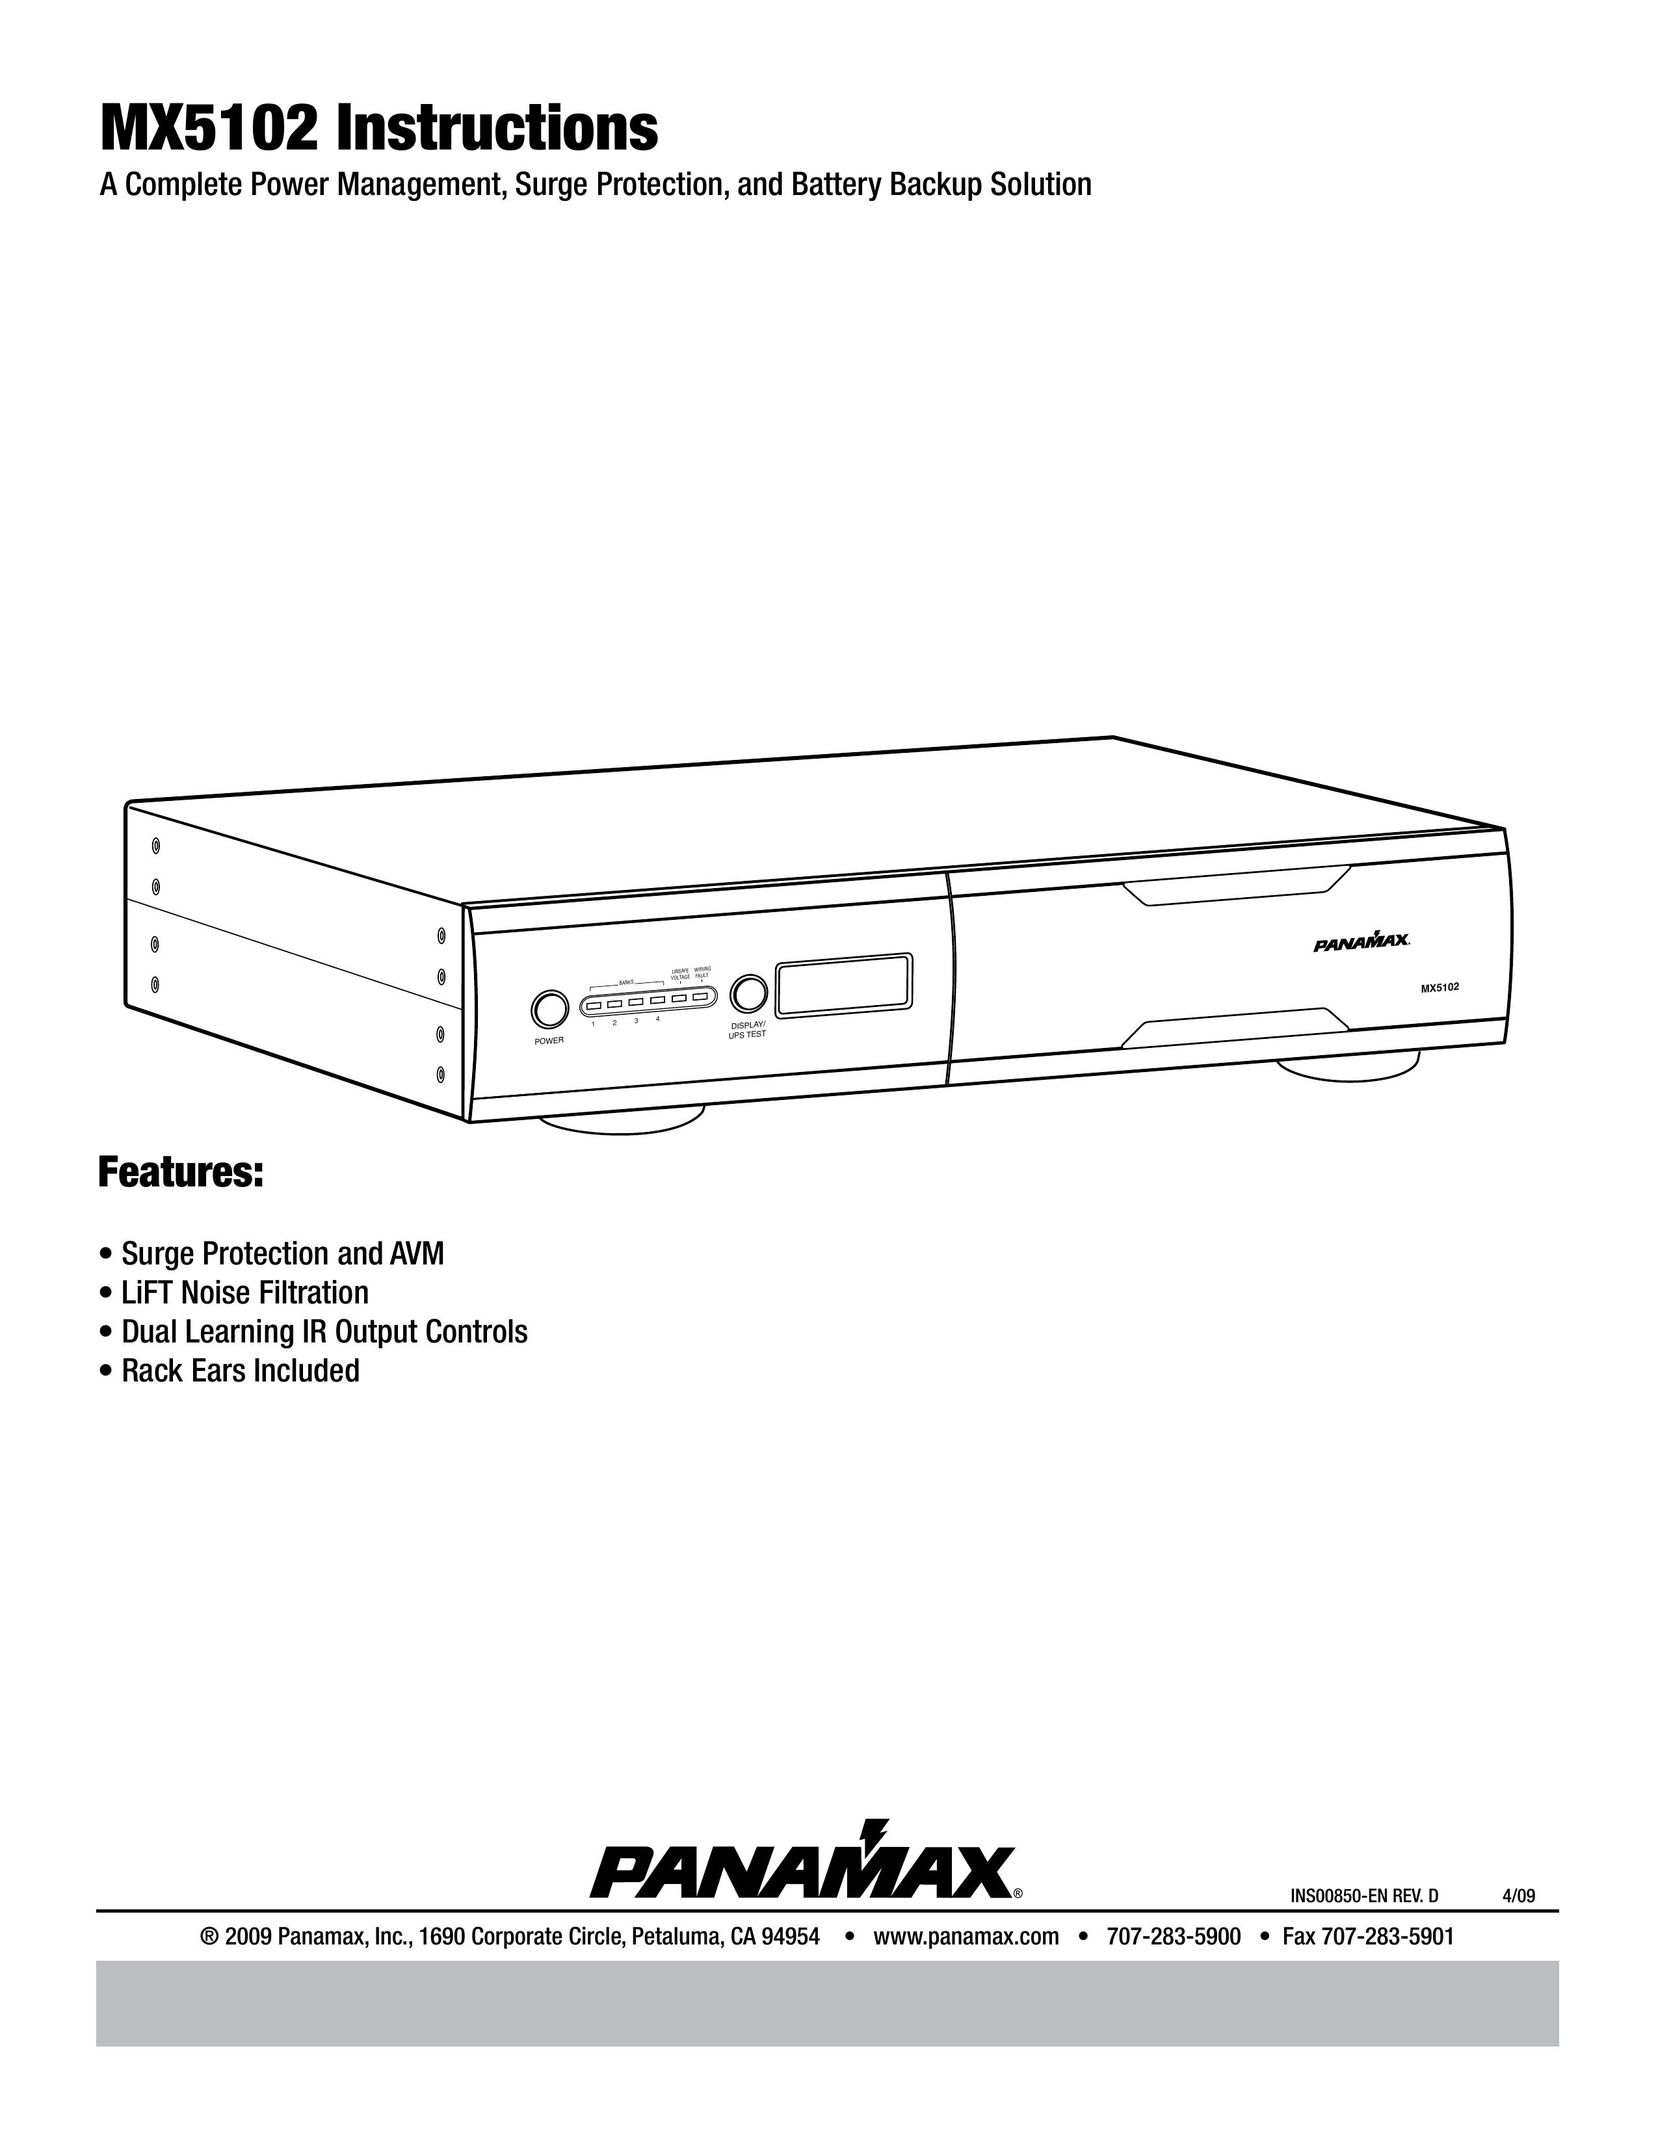 Panamax MX5102 Surge Protector User Manual